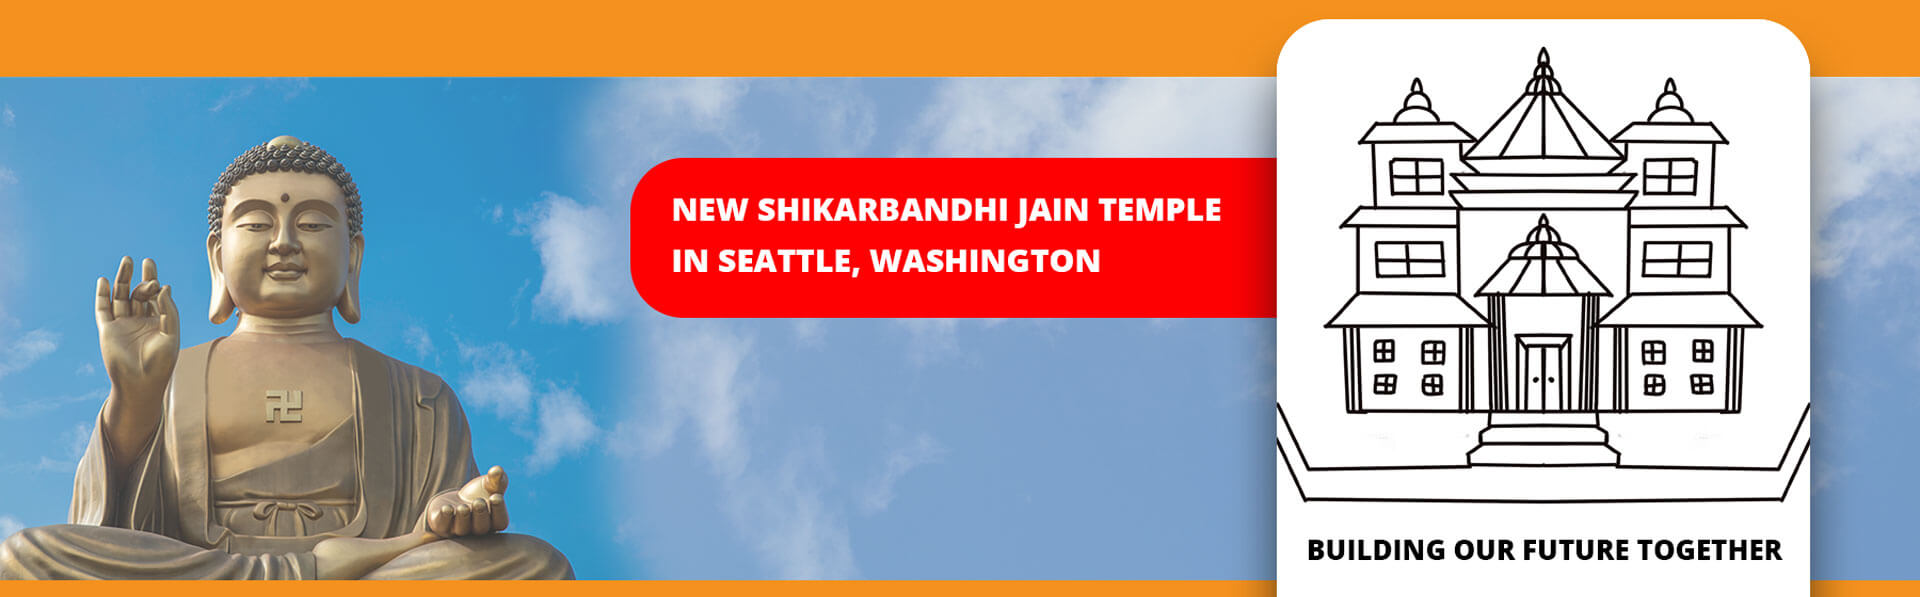 New Shikarbandhi Jain Temple